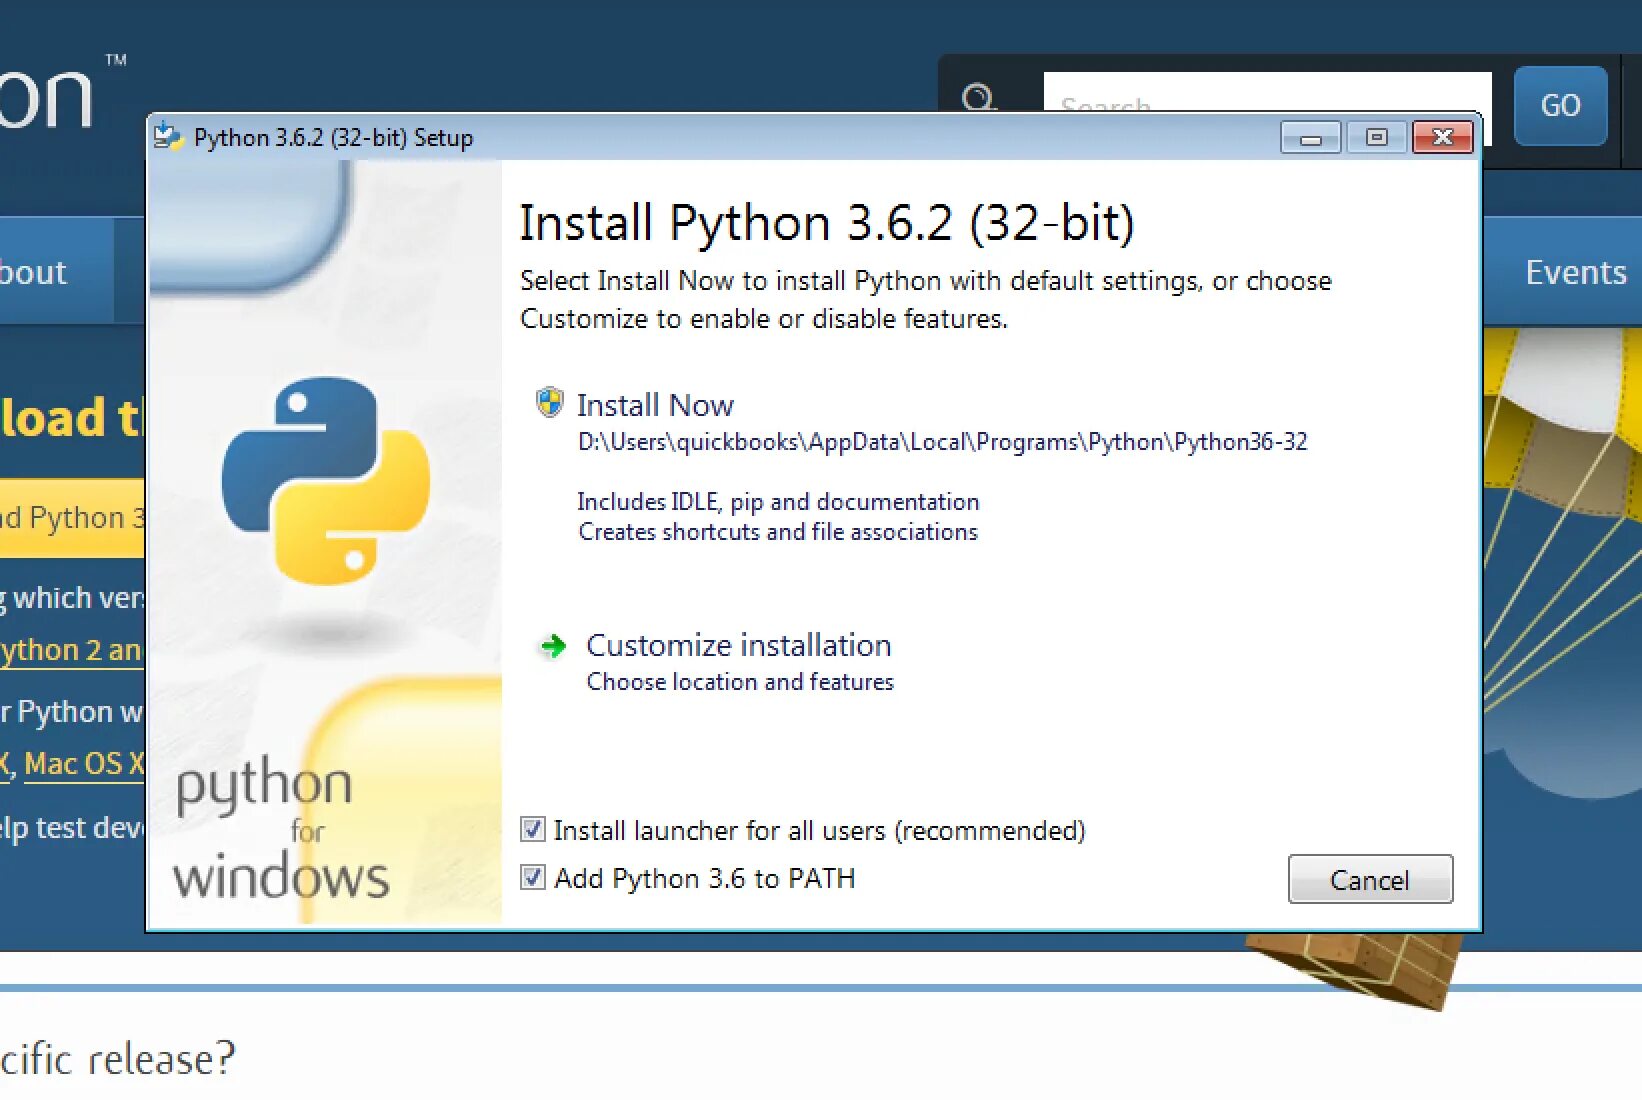 Reply python. Python Windows. Питон Path. Python install. Python install Path.